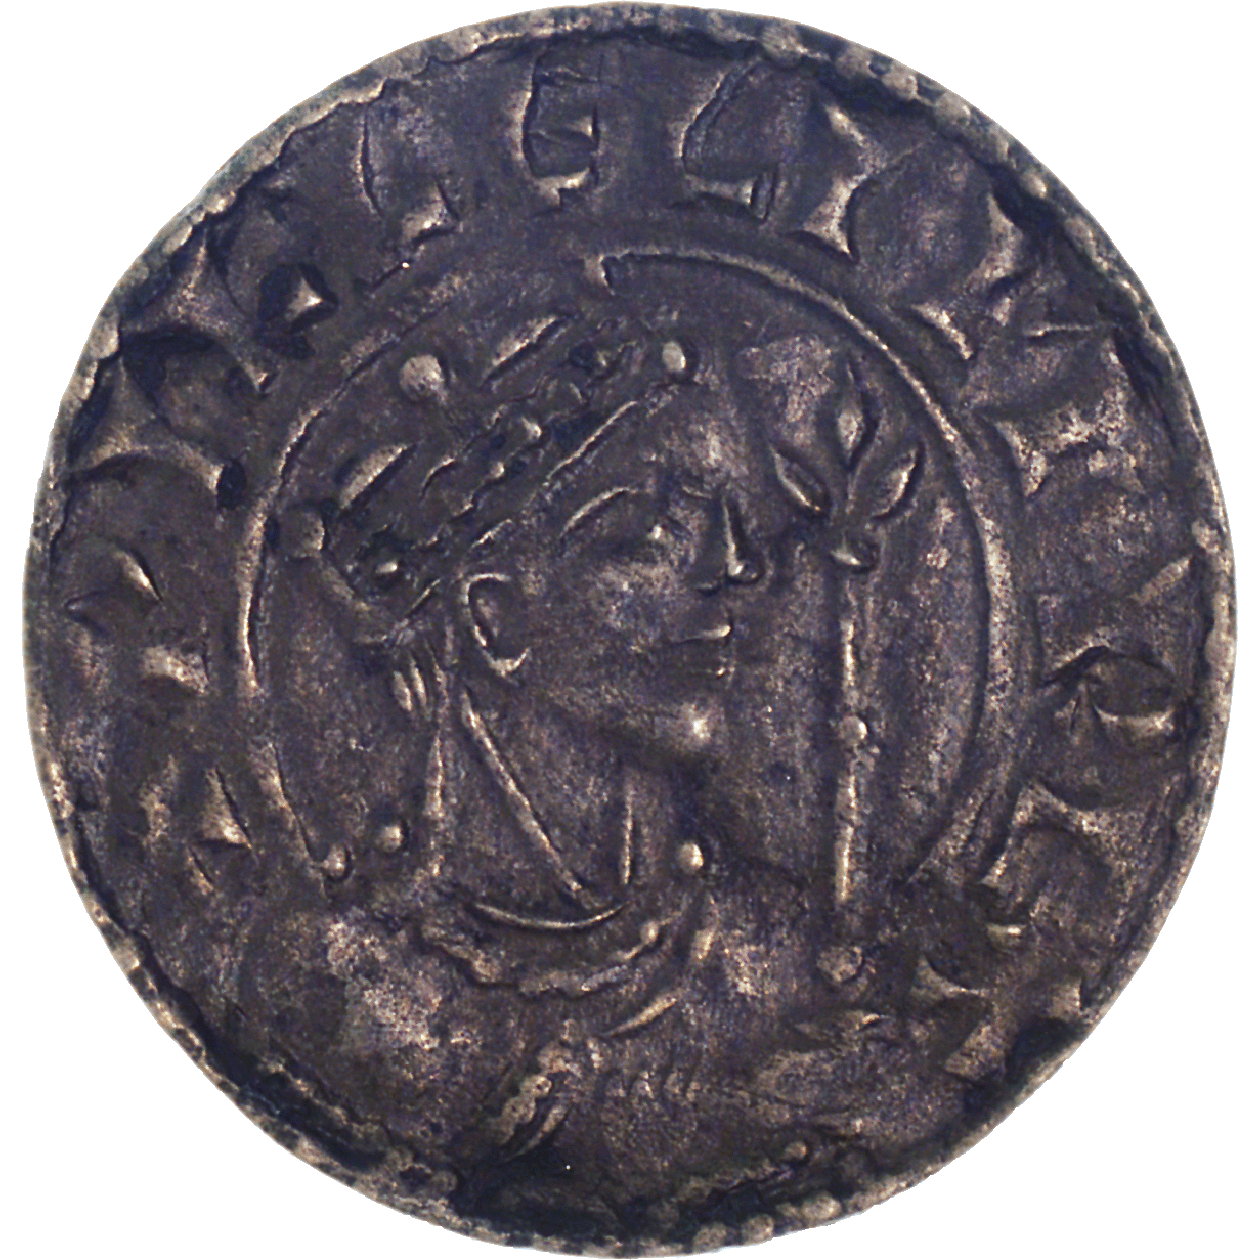 Kingdom of England, William I the Conqueror, Penny (obverse)